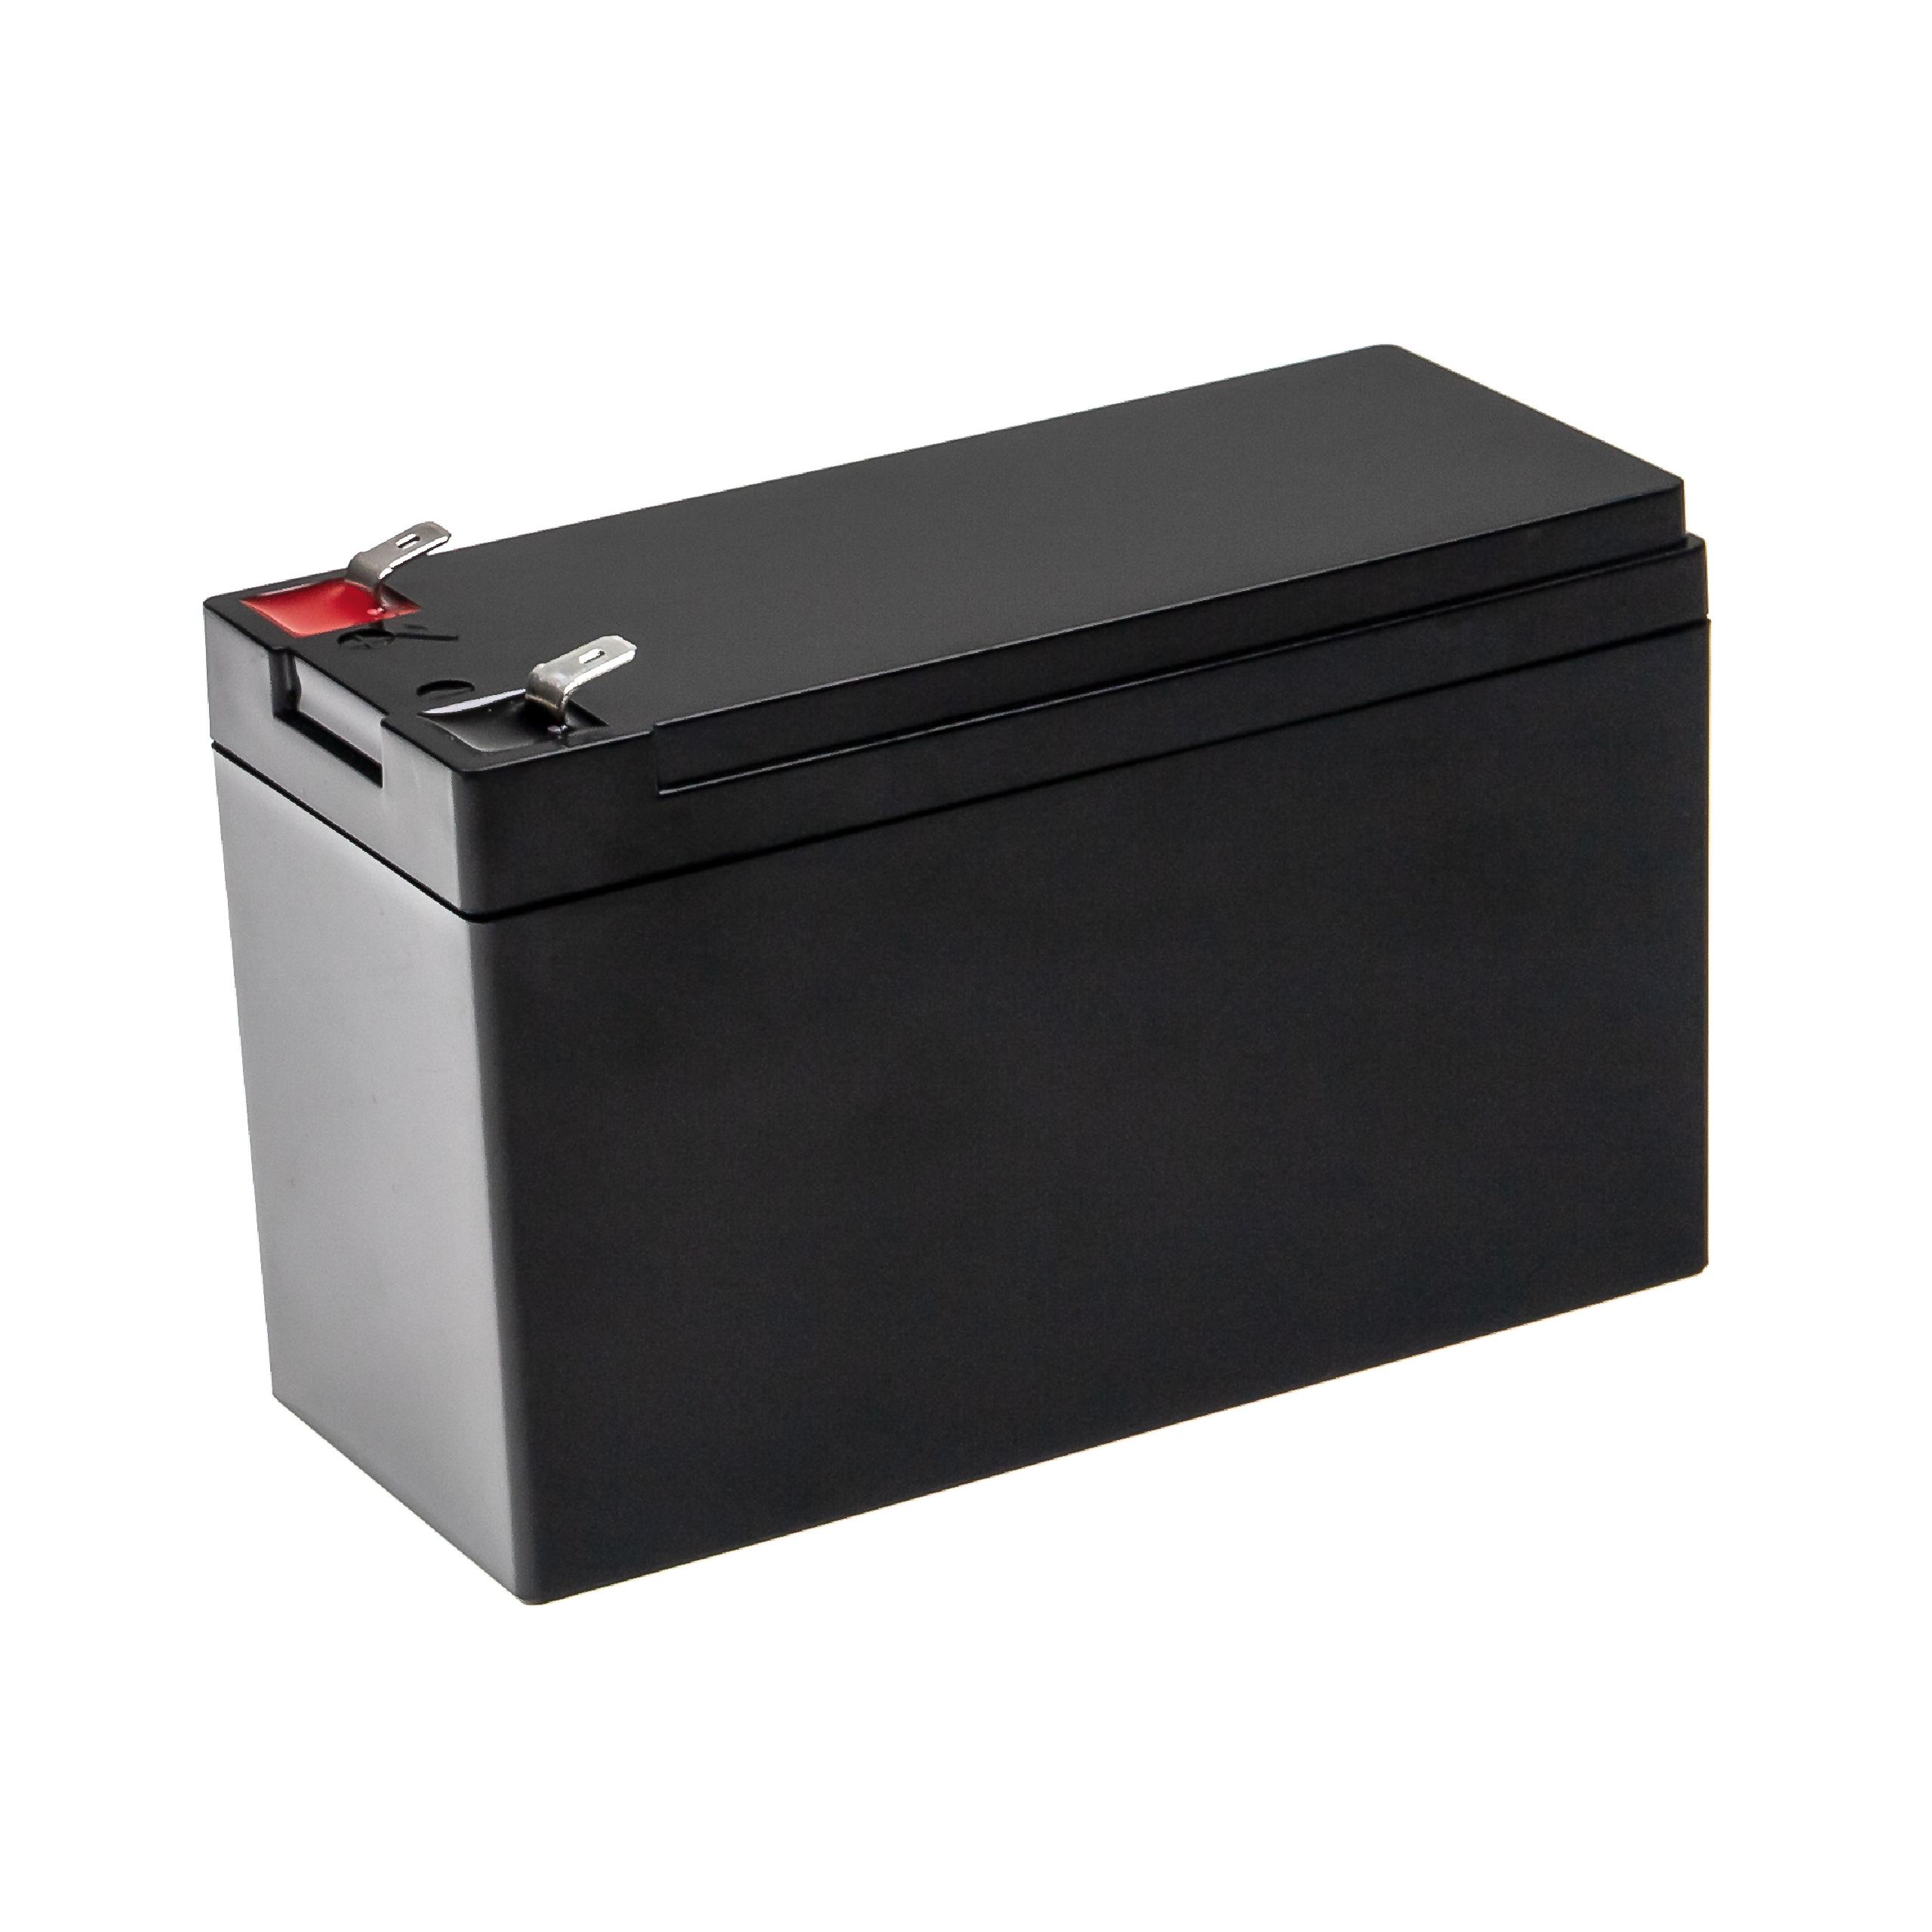 Bordbatterie Akku passend für Wohnmobil, Boot, Solaranlage - 6 Ah 12,8V LiFePO4, 6000mAh, schwarz